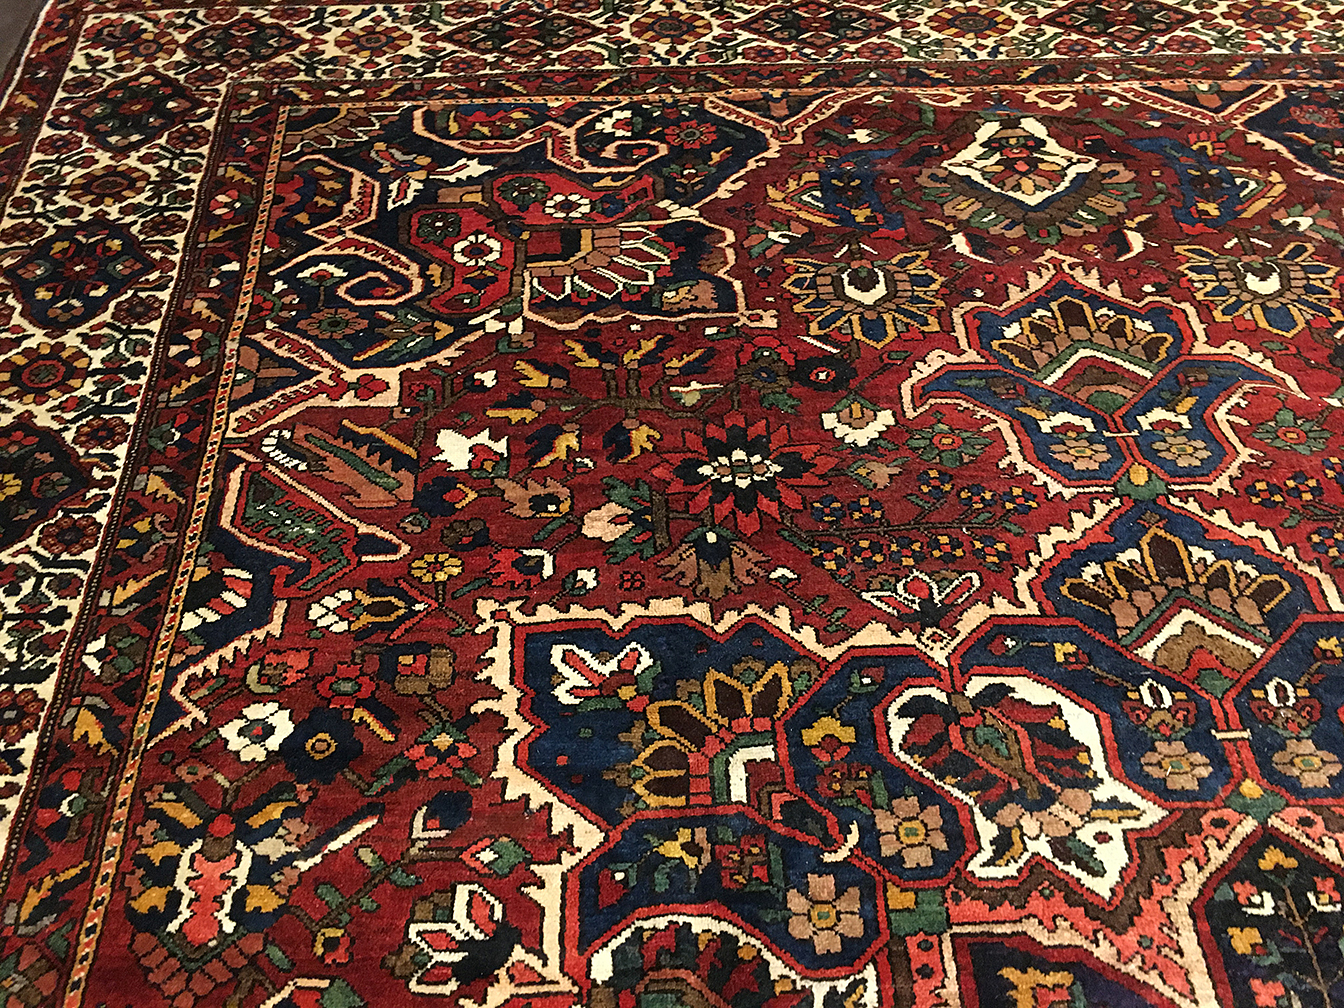 Vintage baktiari Carpet - # 53247